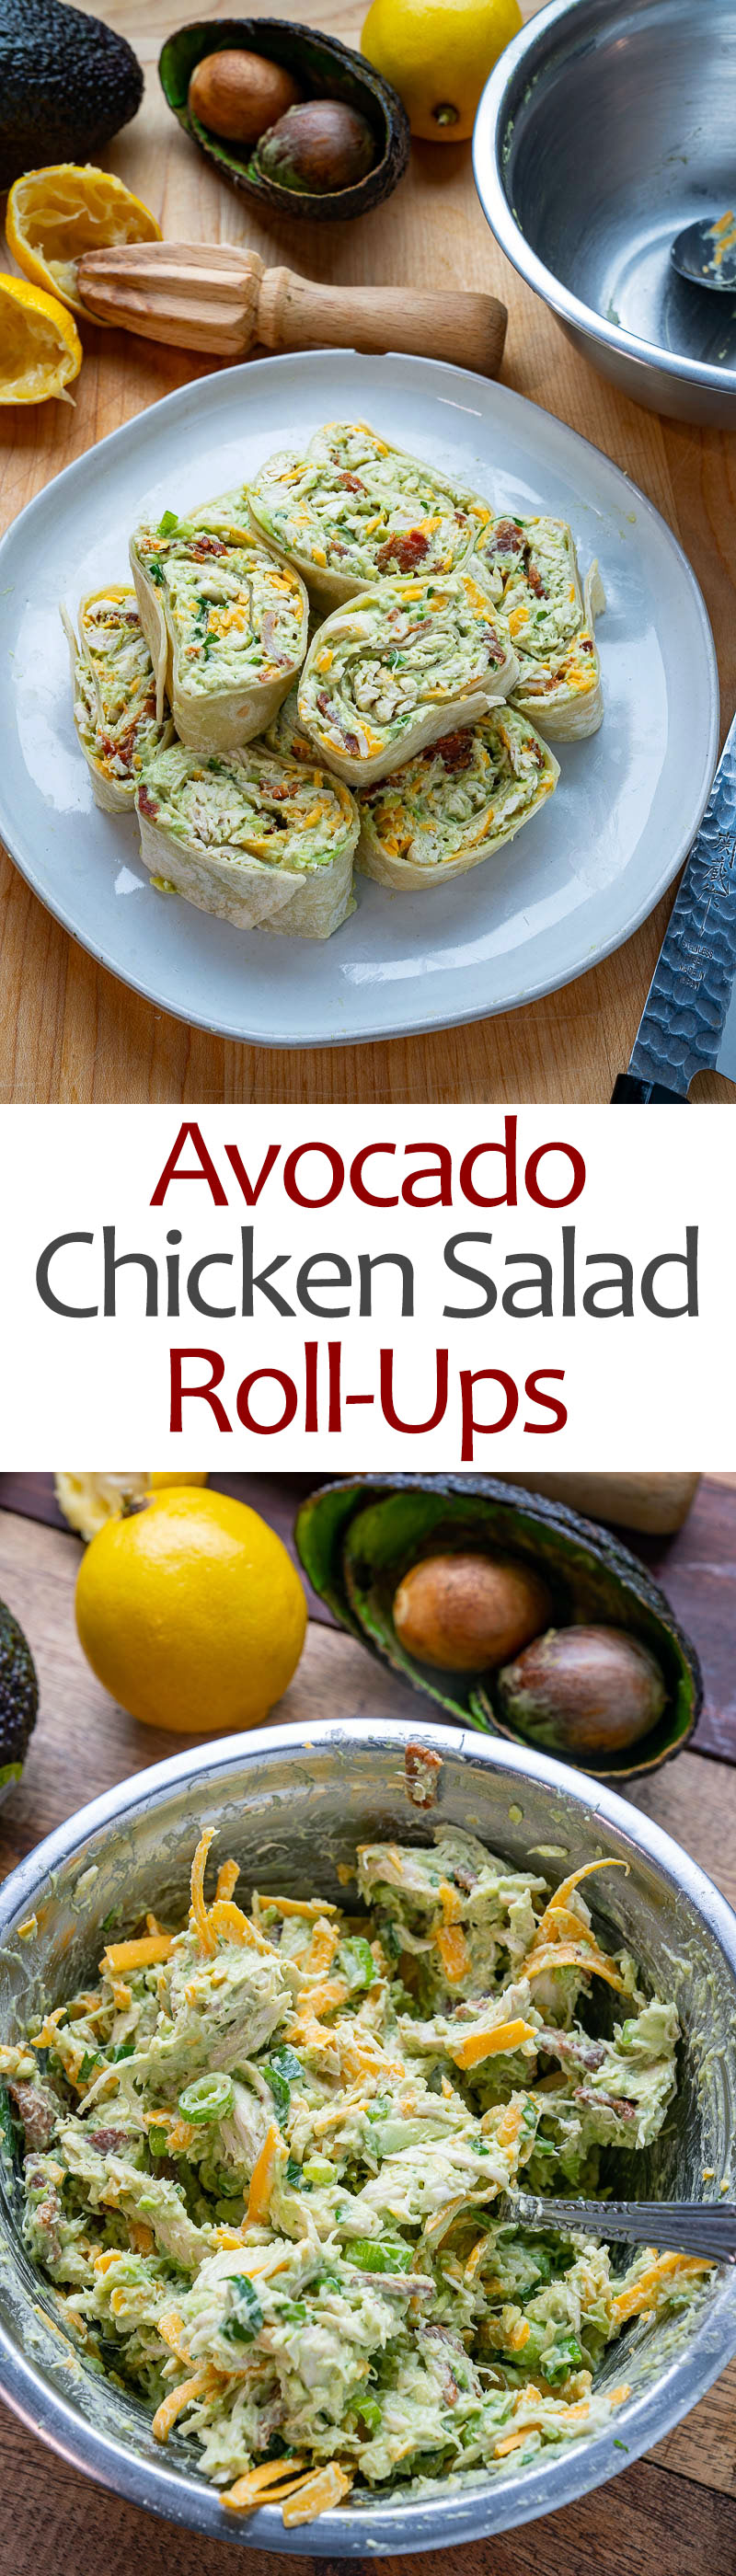 Bacon and Cheddar Avocado Chicken Salad Roll-Ups